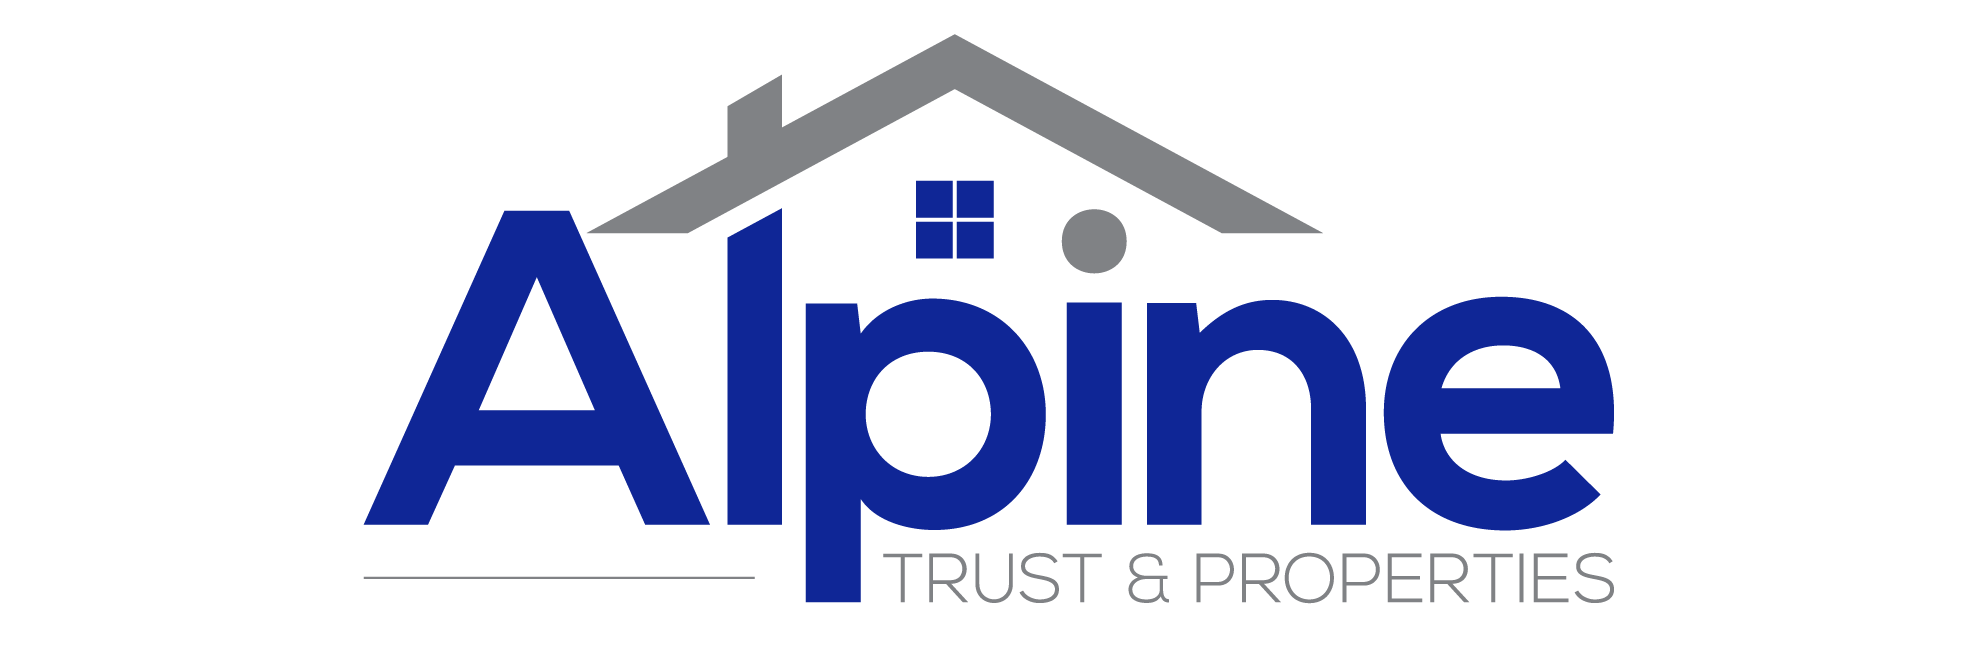 Alpine Income Property Trust Inc